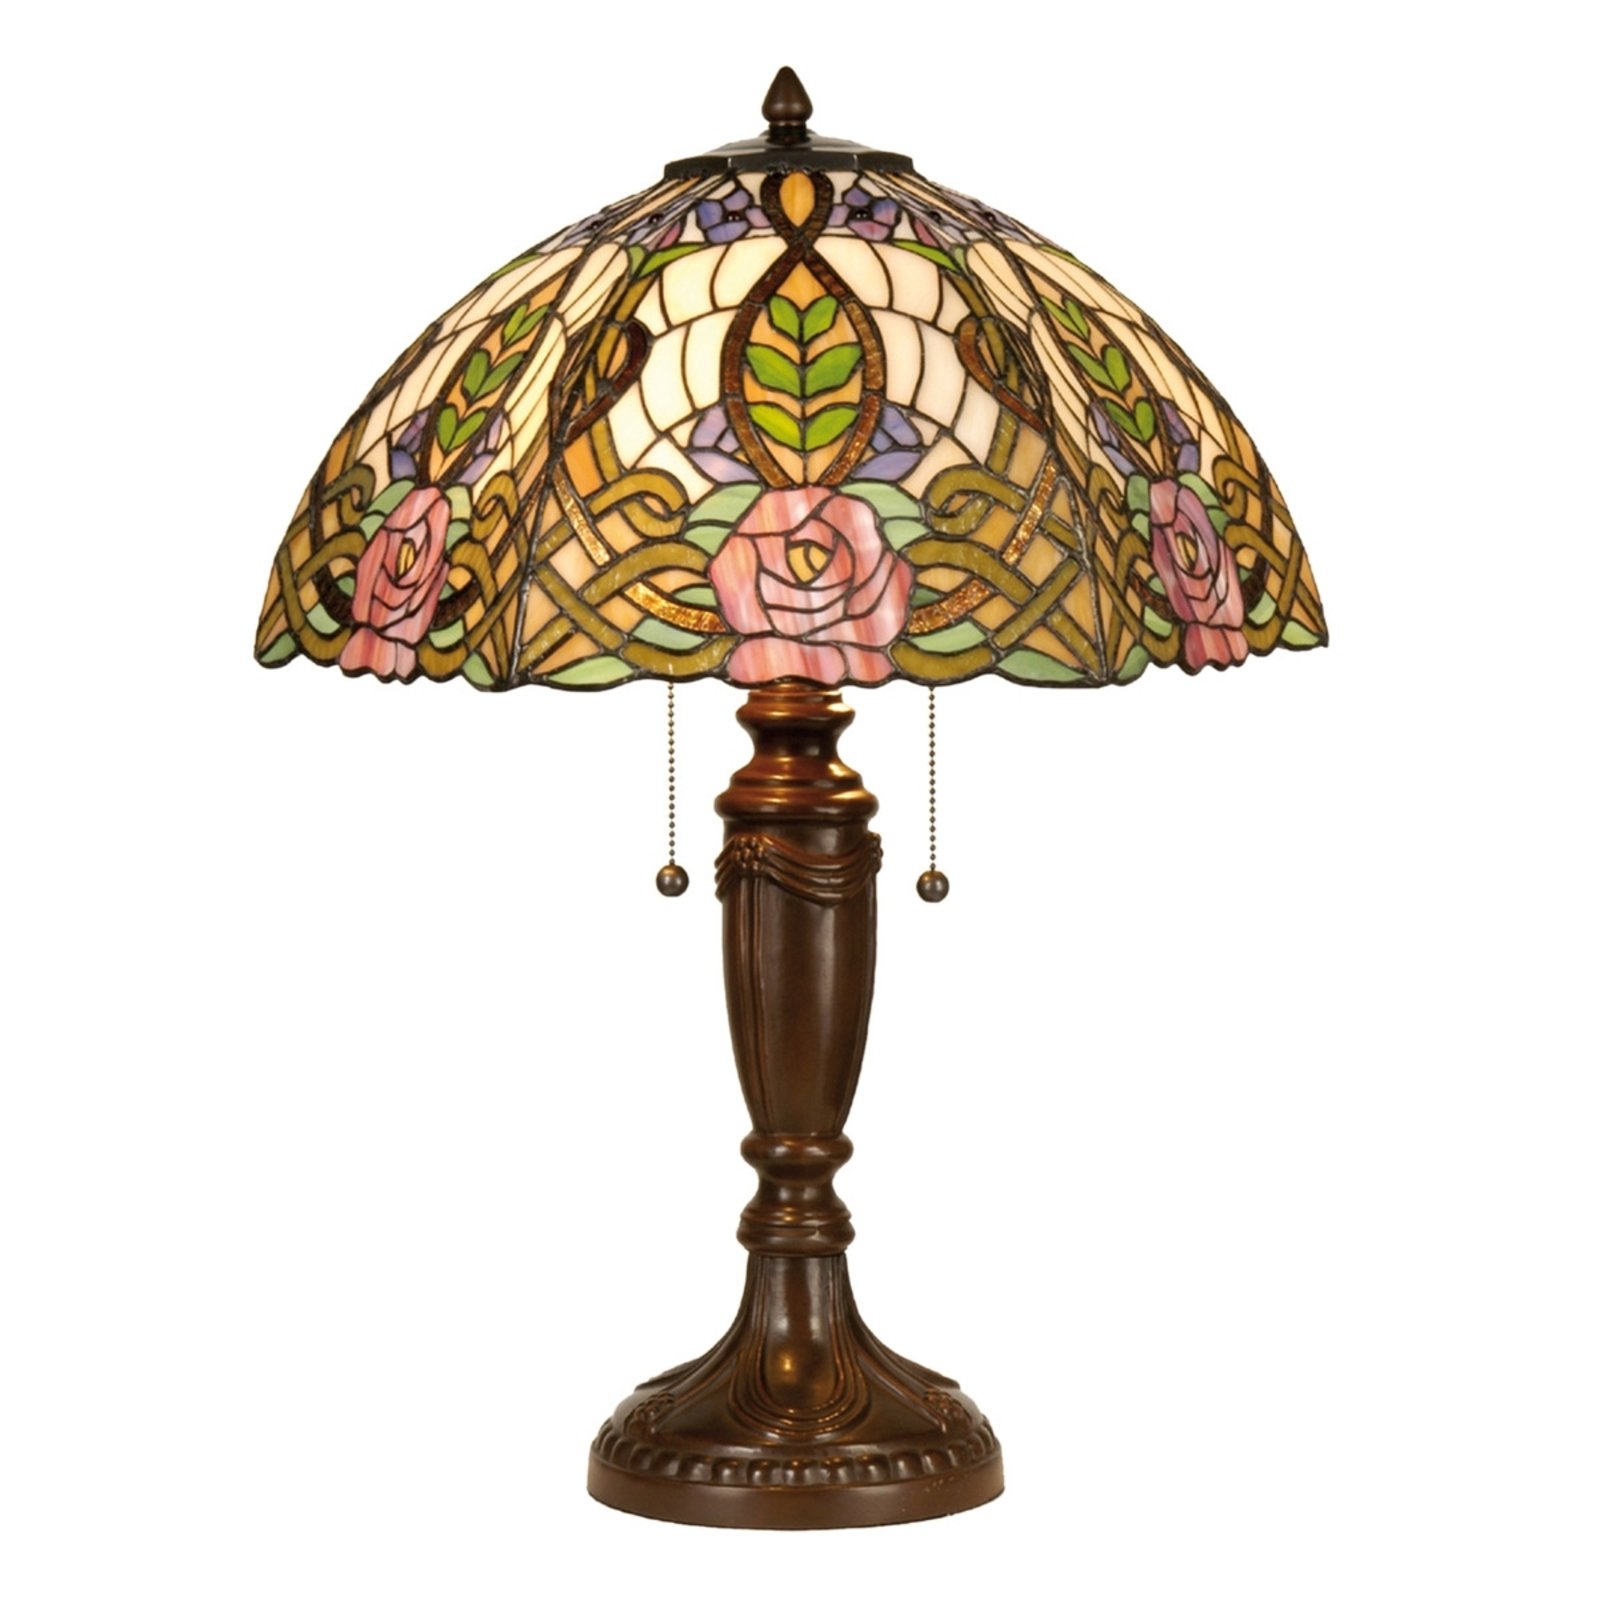 Paradise stolna lampa Eden u Tiffany stilu